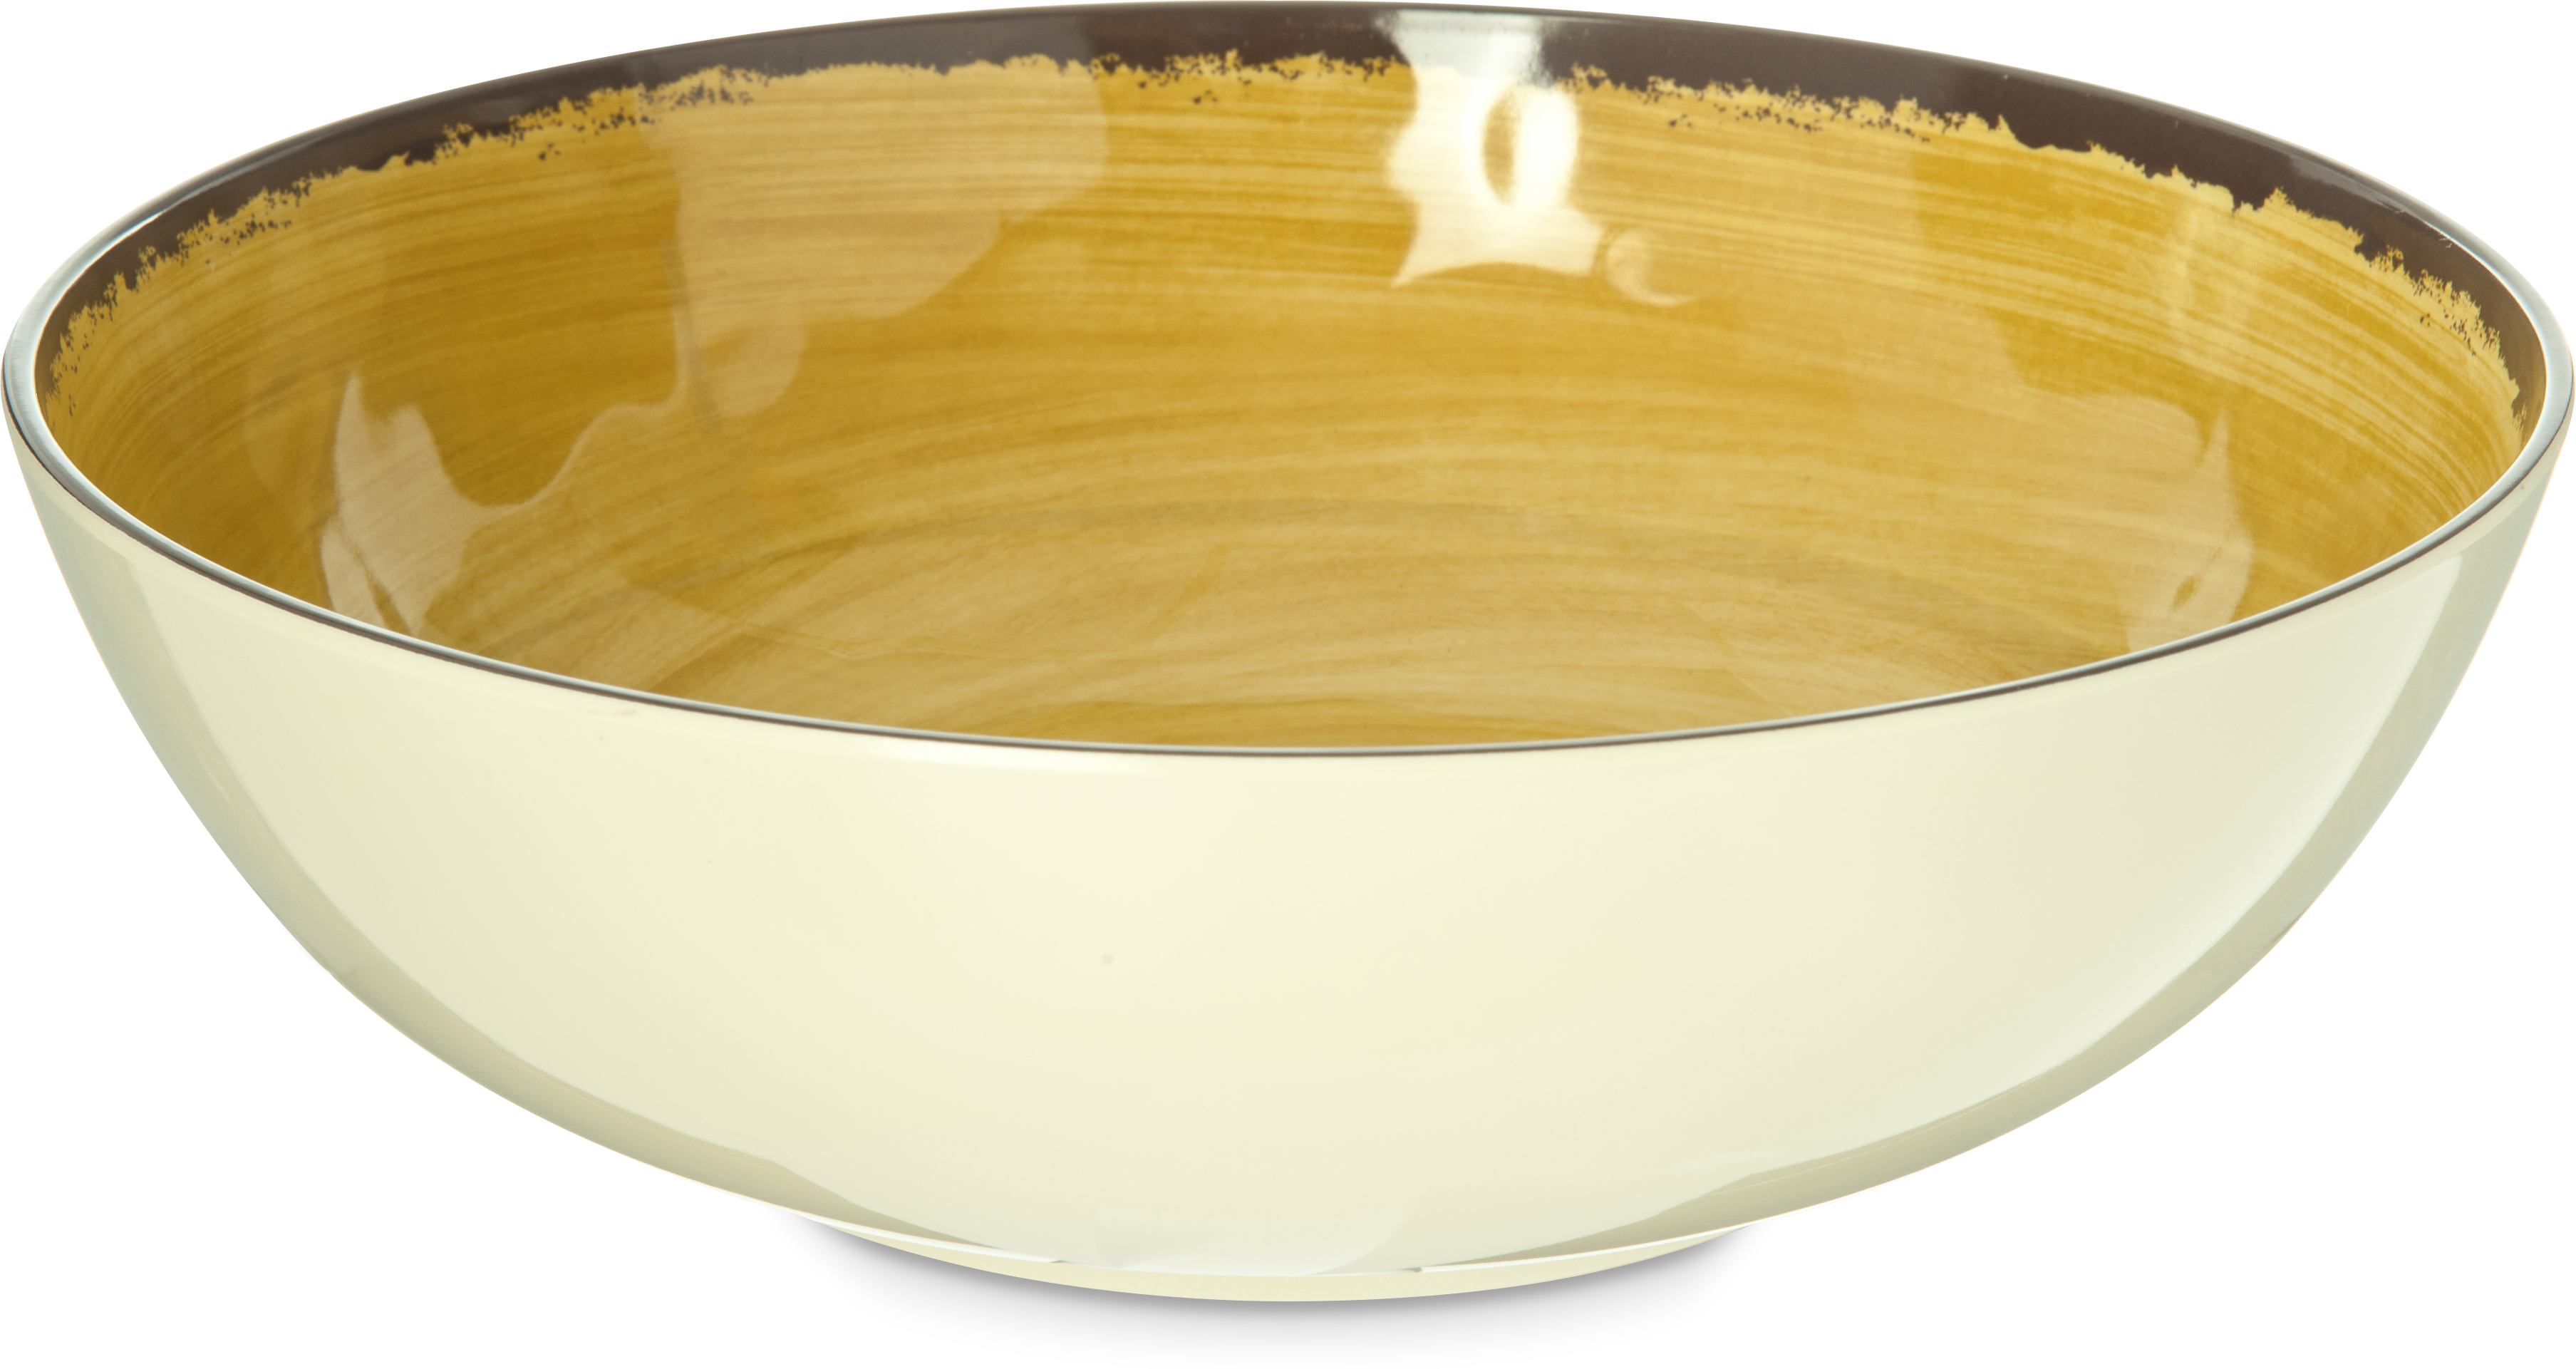 Mingle Melamine Large Serving Bowl 5 Quart - Amber